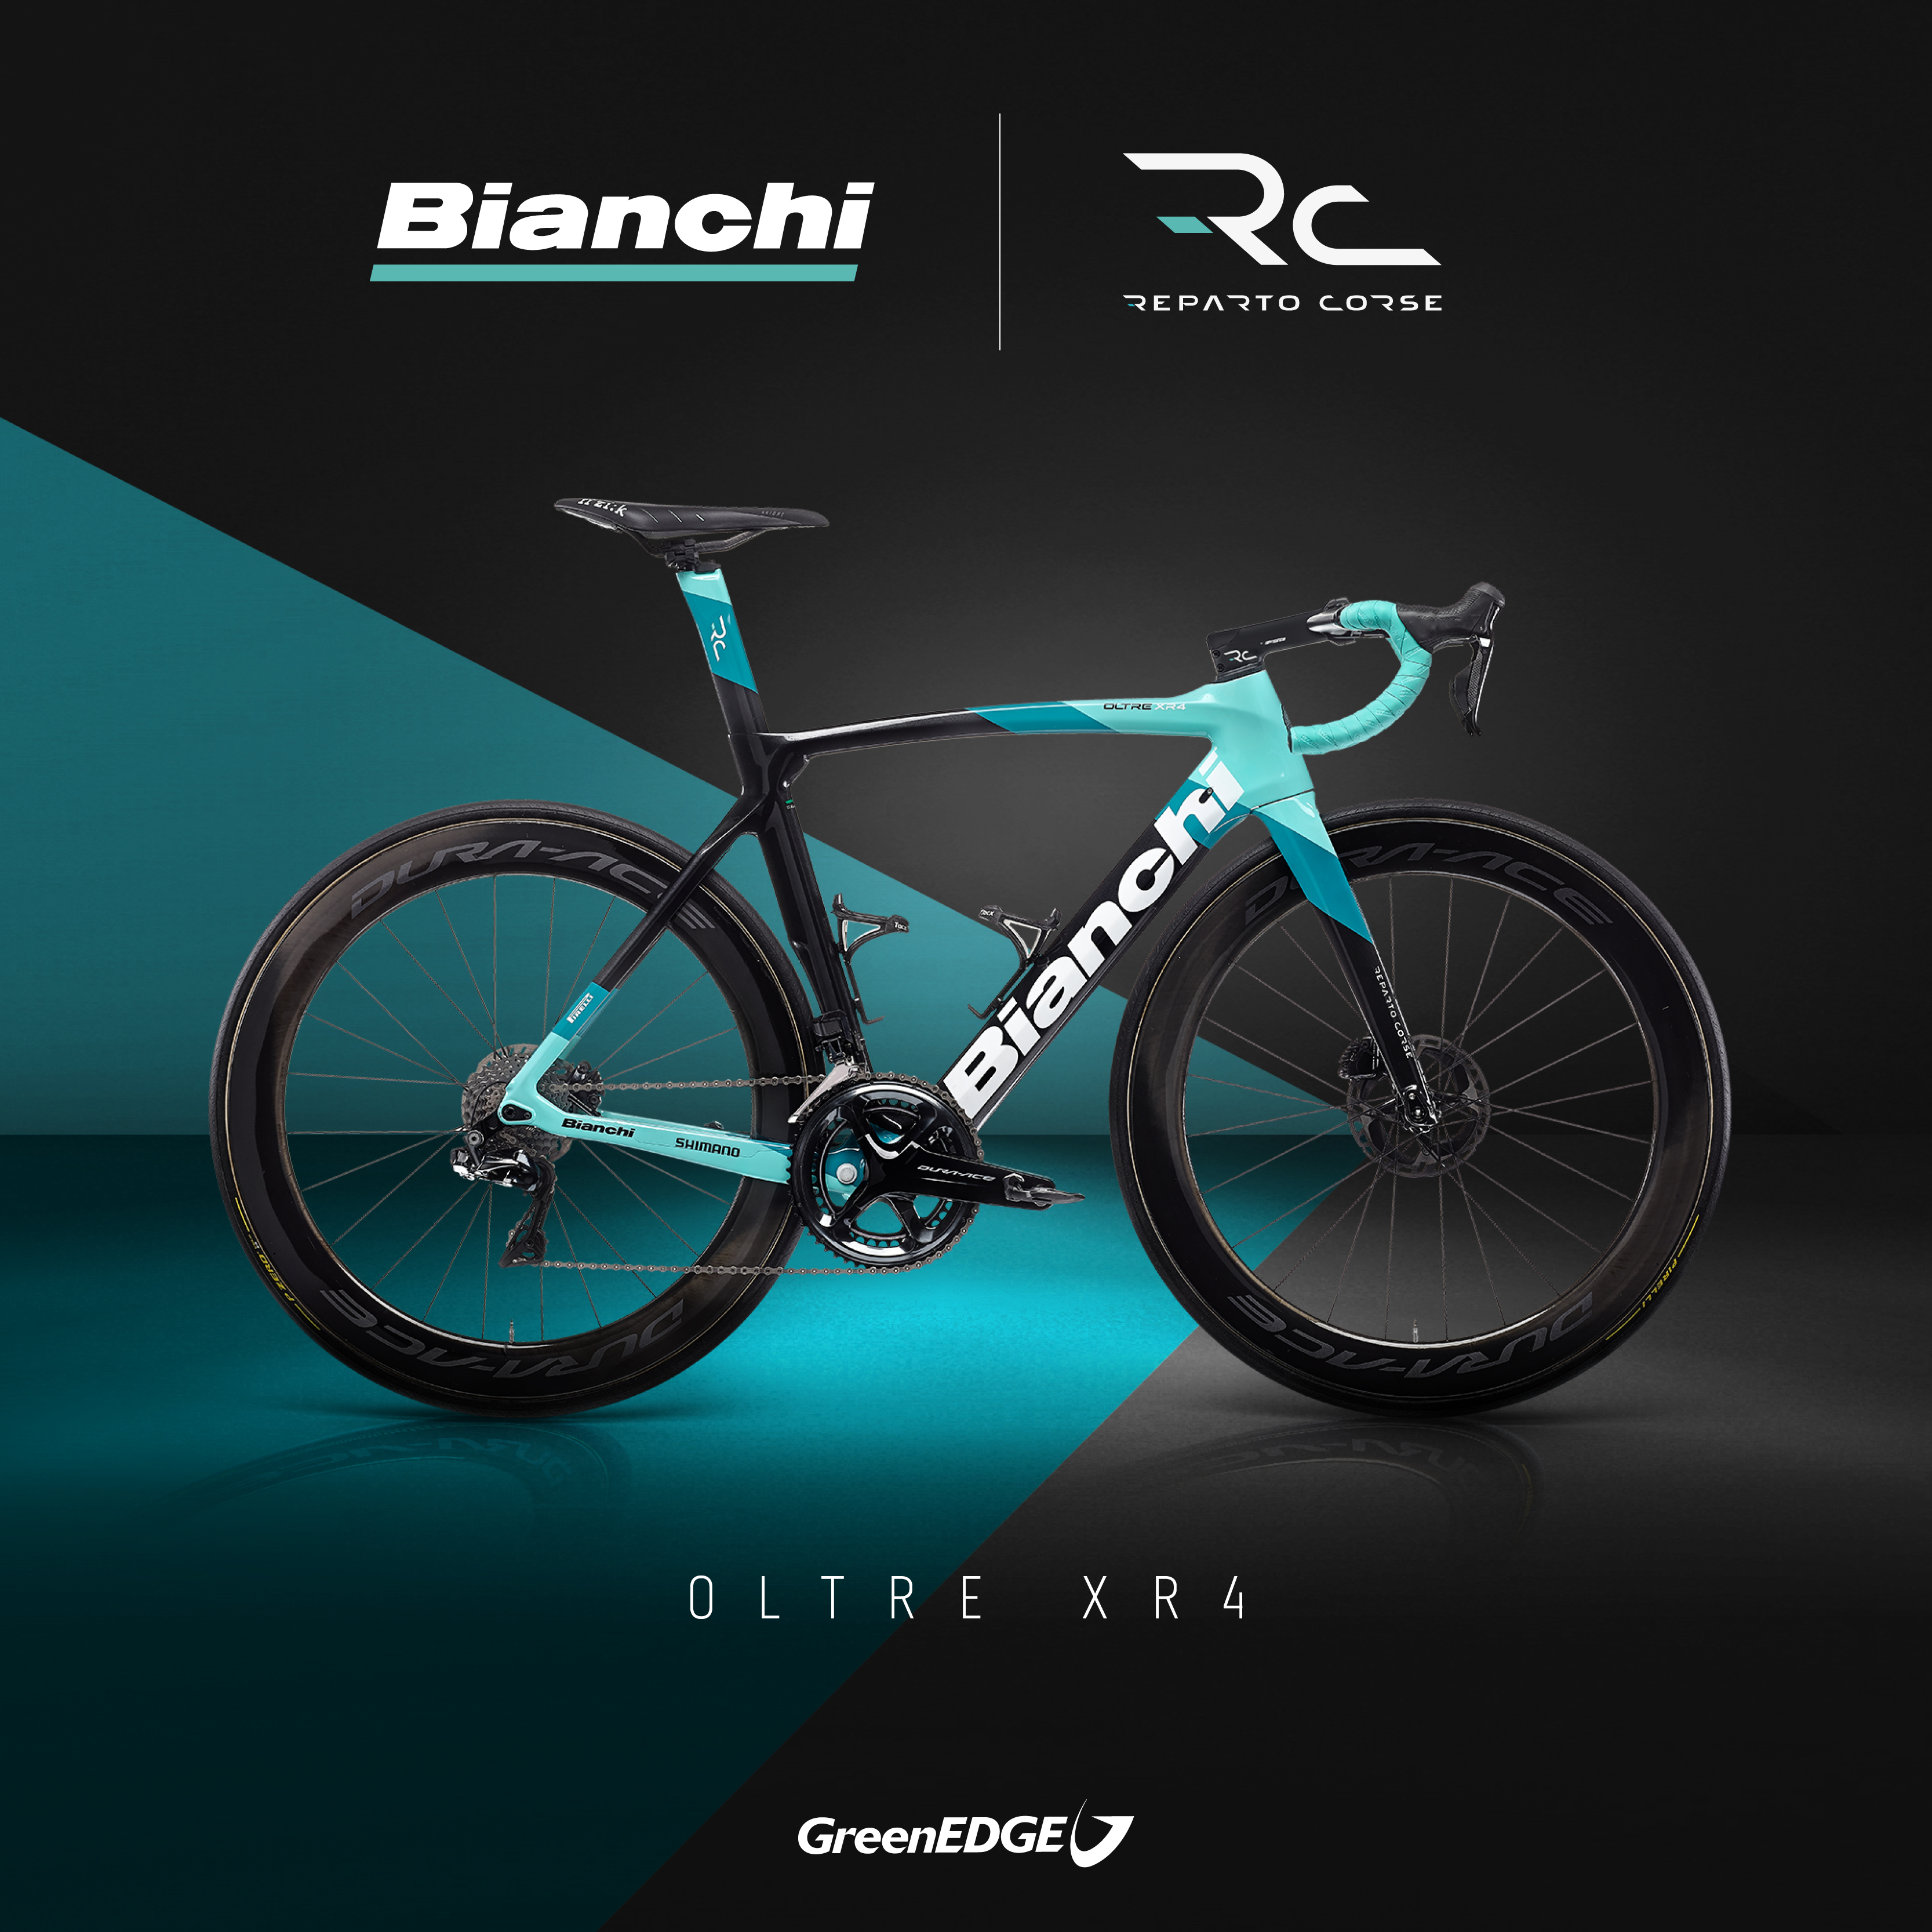 The new look bikes for Team BikeExchange's 2021 season | Bianchi